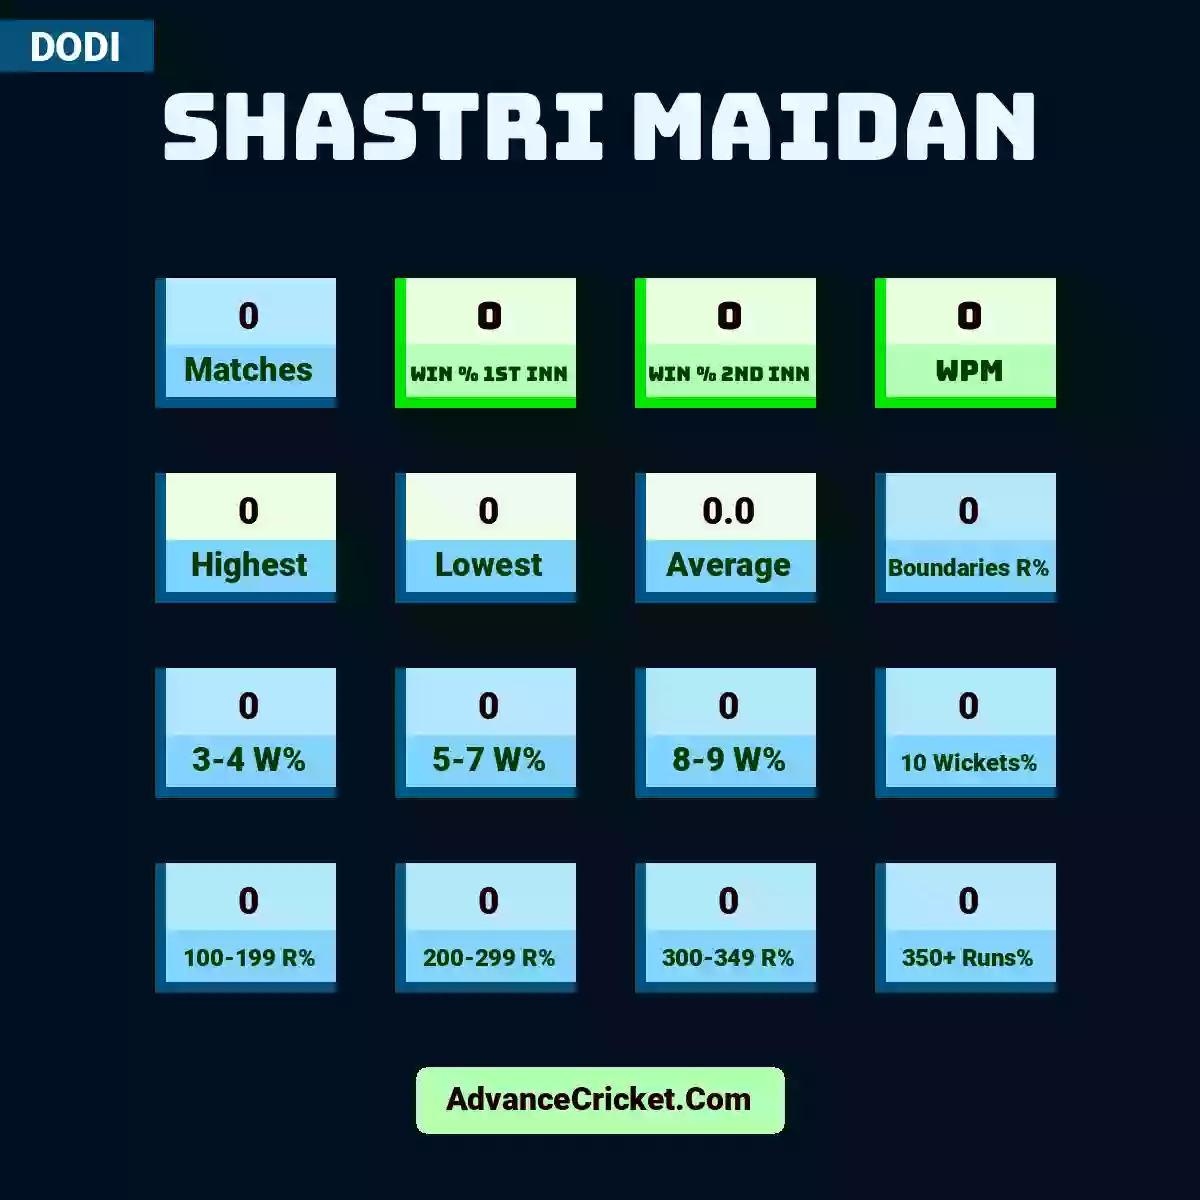 Image showing Shastri Maidan with Matches: 0, Win % 1st Inn: 0, Win % 2nd Inn: 0, WPM: 0, Highest: 0, Lowest: 0, Average: 0.0, Boundaries R%: 0, 3-4 W%: 0, 5-7 W%: 0, 8-9 W%: 0, 10 Wickets%: 0, 100-199 R%: 0, 200-299 R%: 0, 300-349 R%: 0, 350+ Runs%: 0.